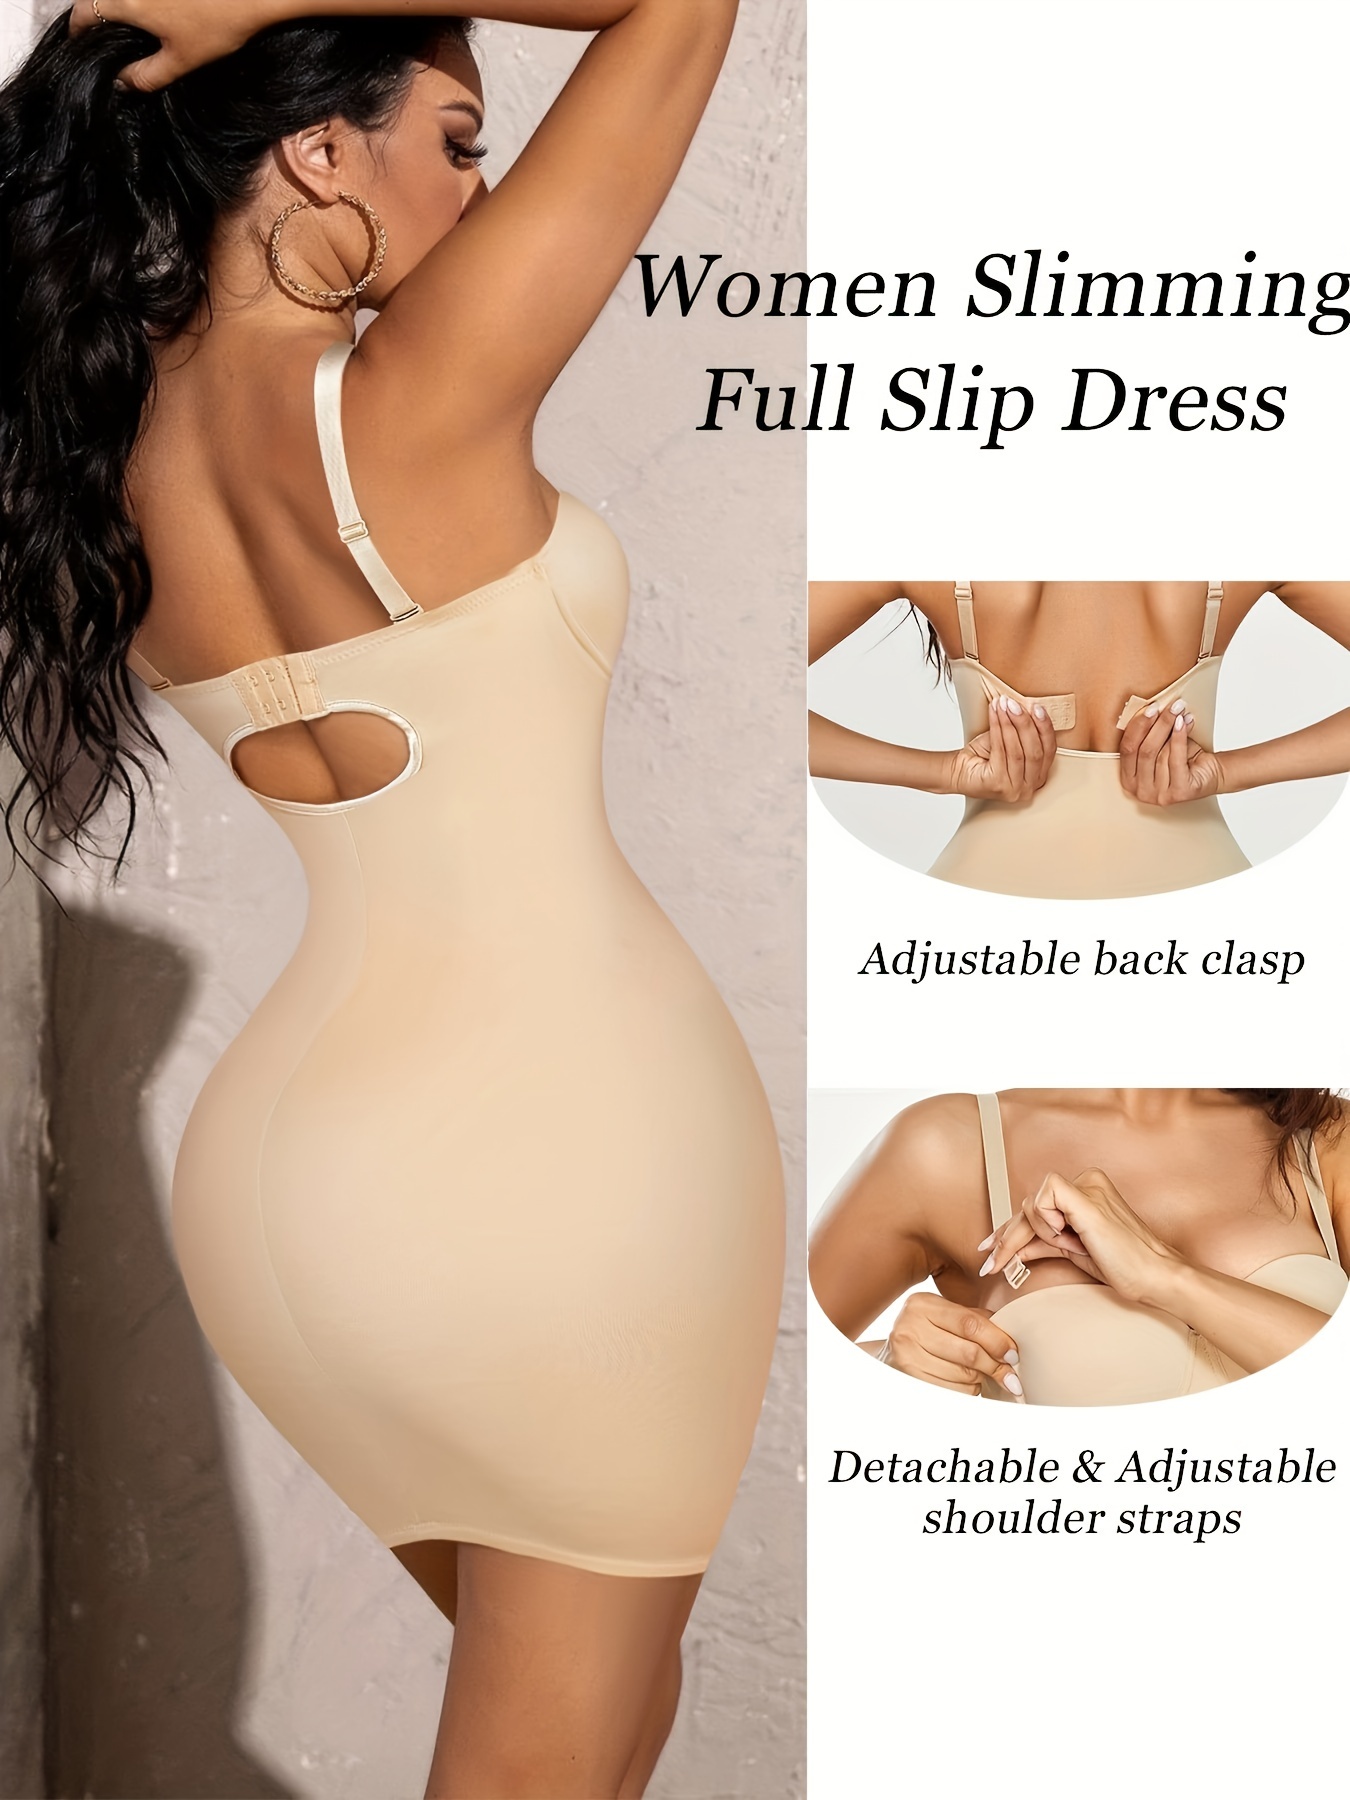 Lillusory Bodycon Dress Has Flattering Tummy-Control Details